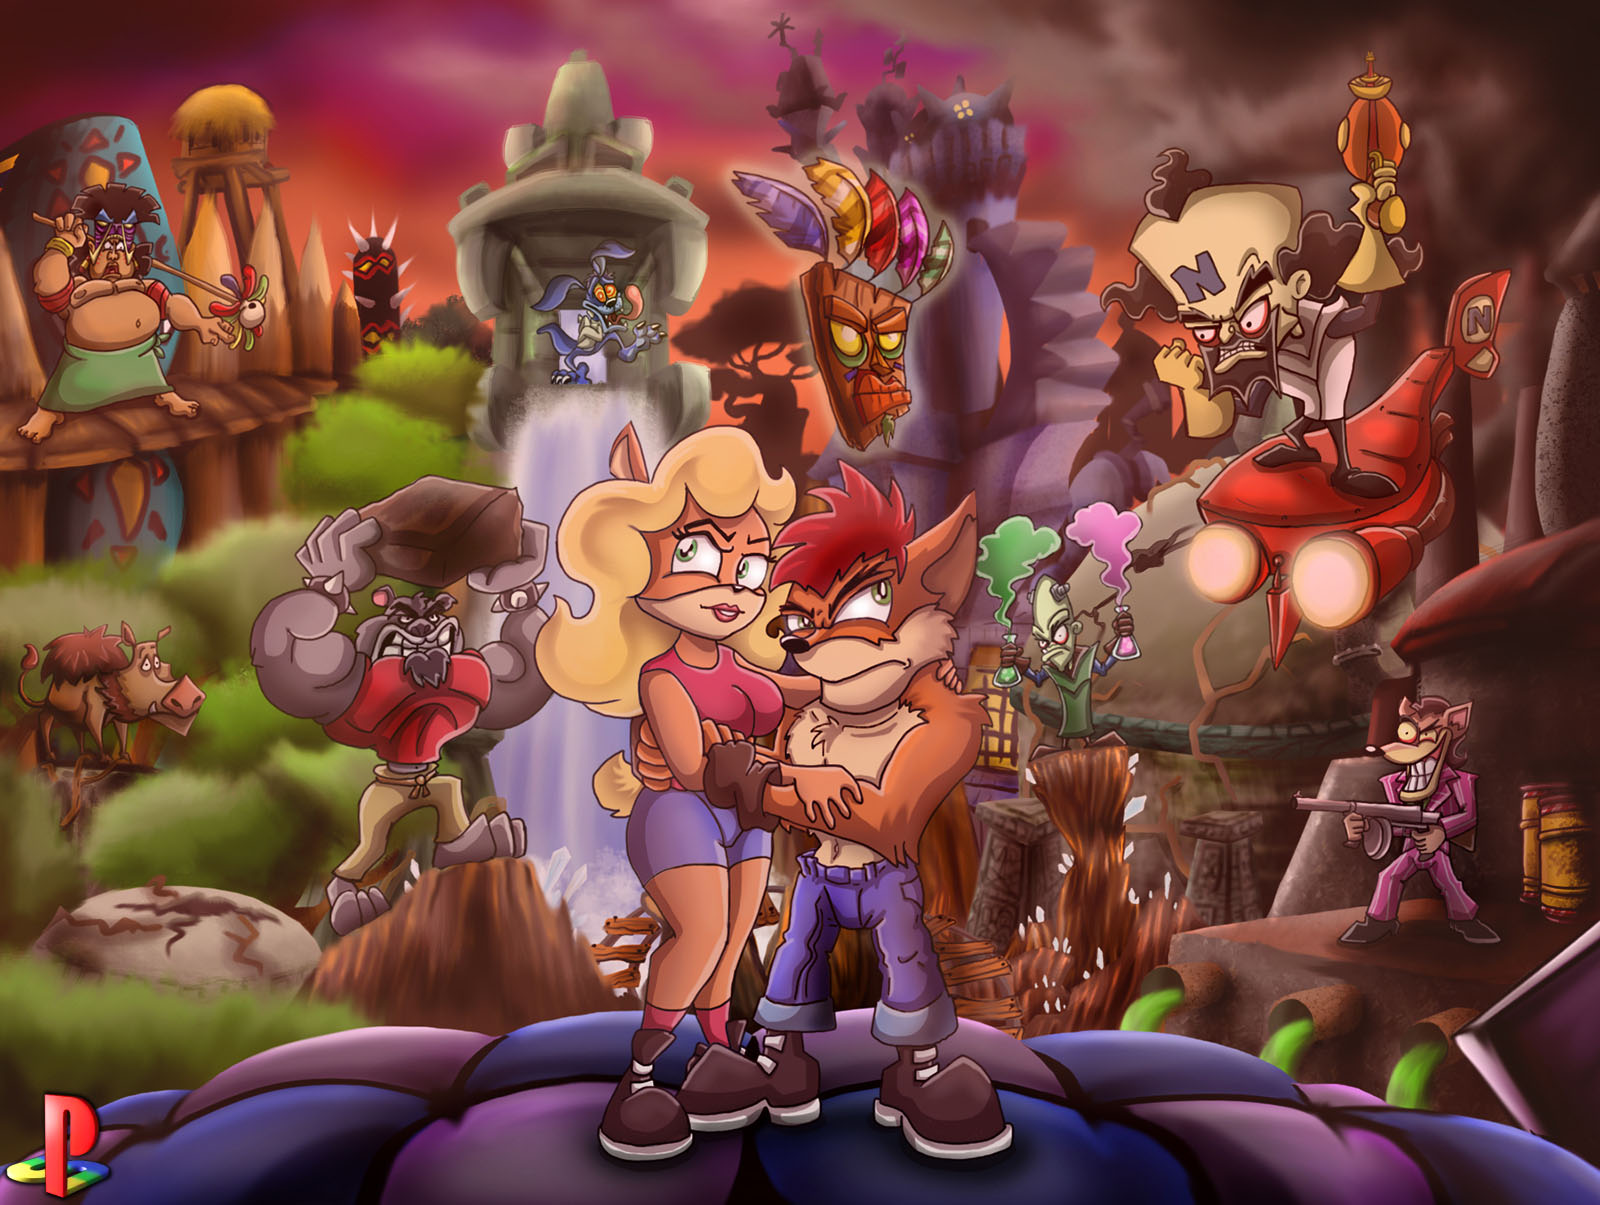 Crash Bandicoot Playstation Anniversary Tribute on Game Art HQ